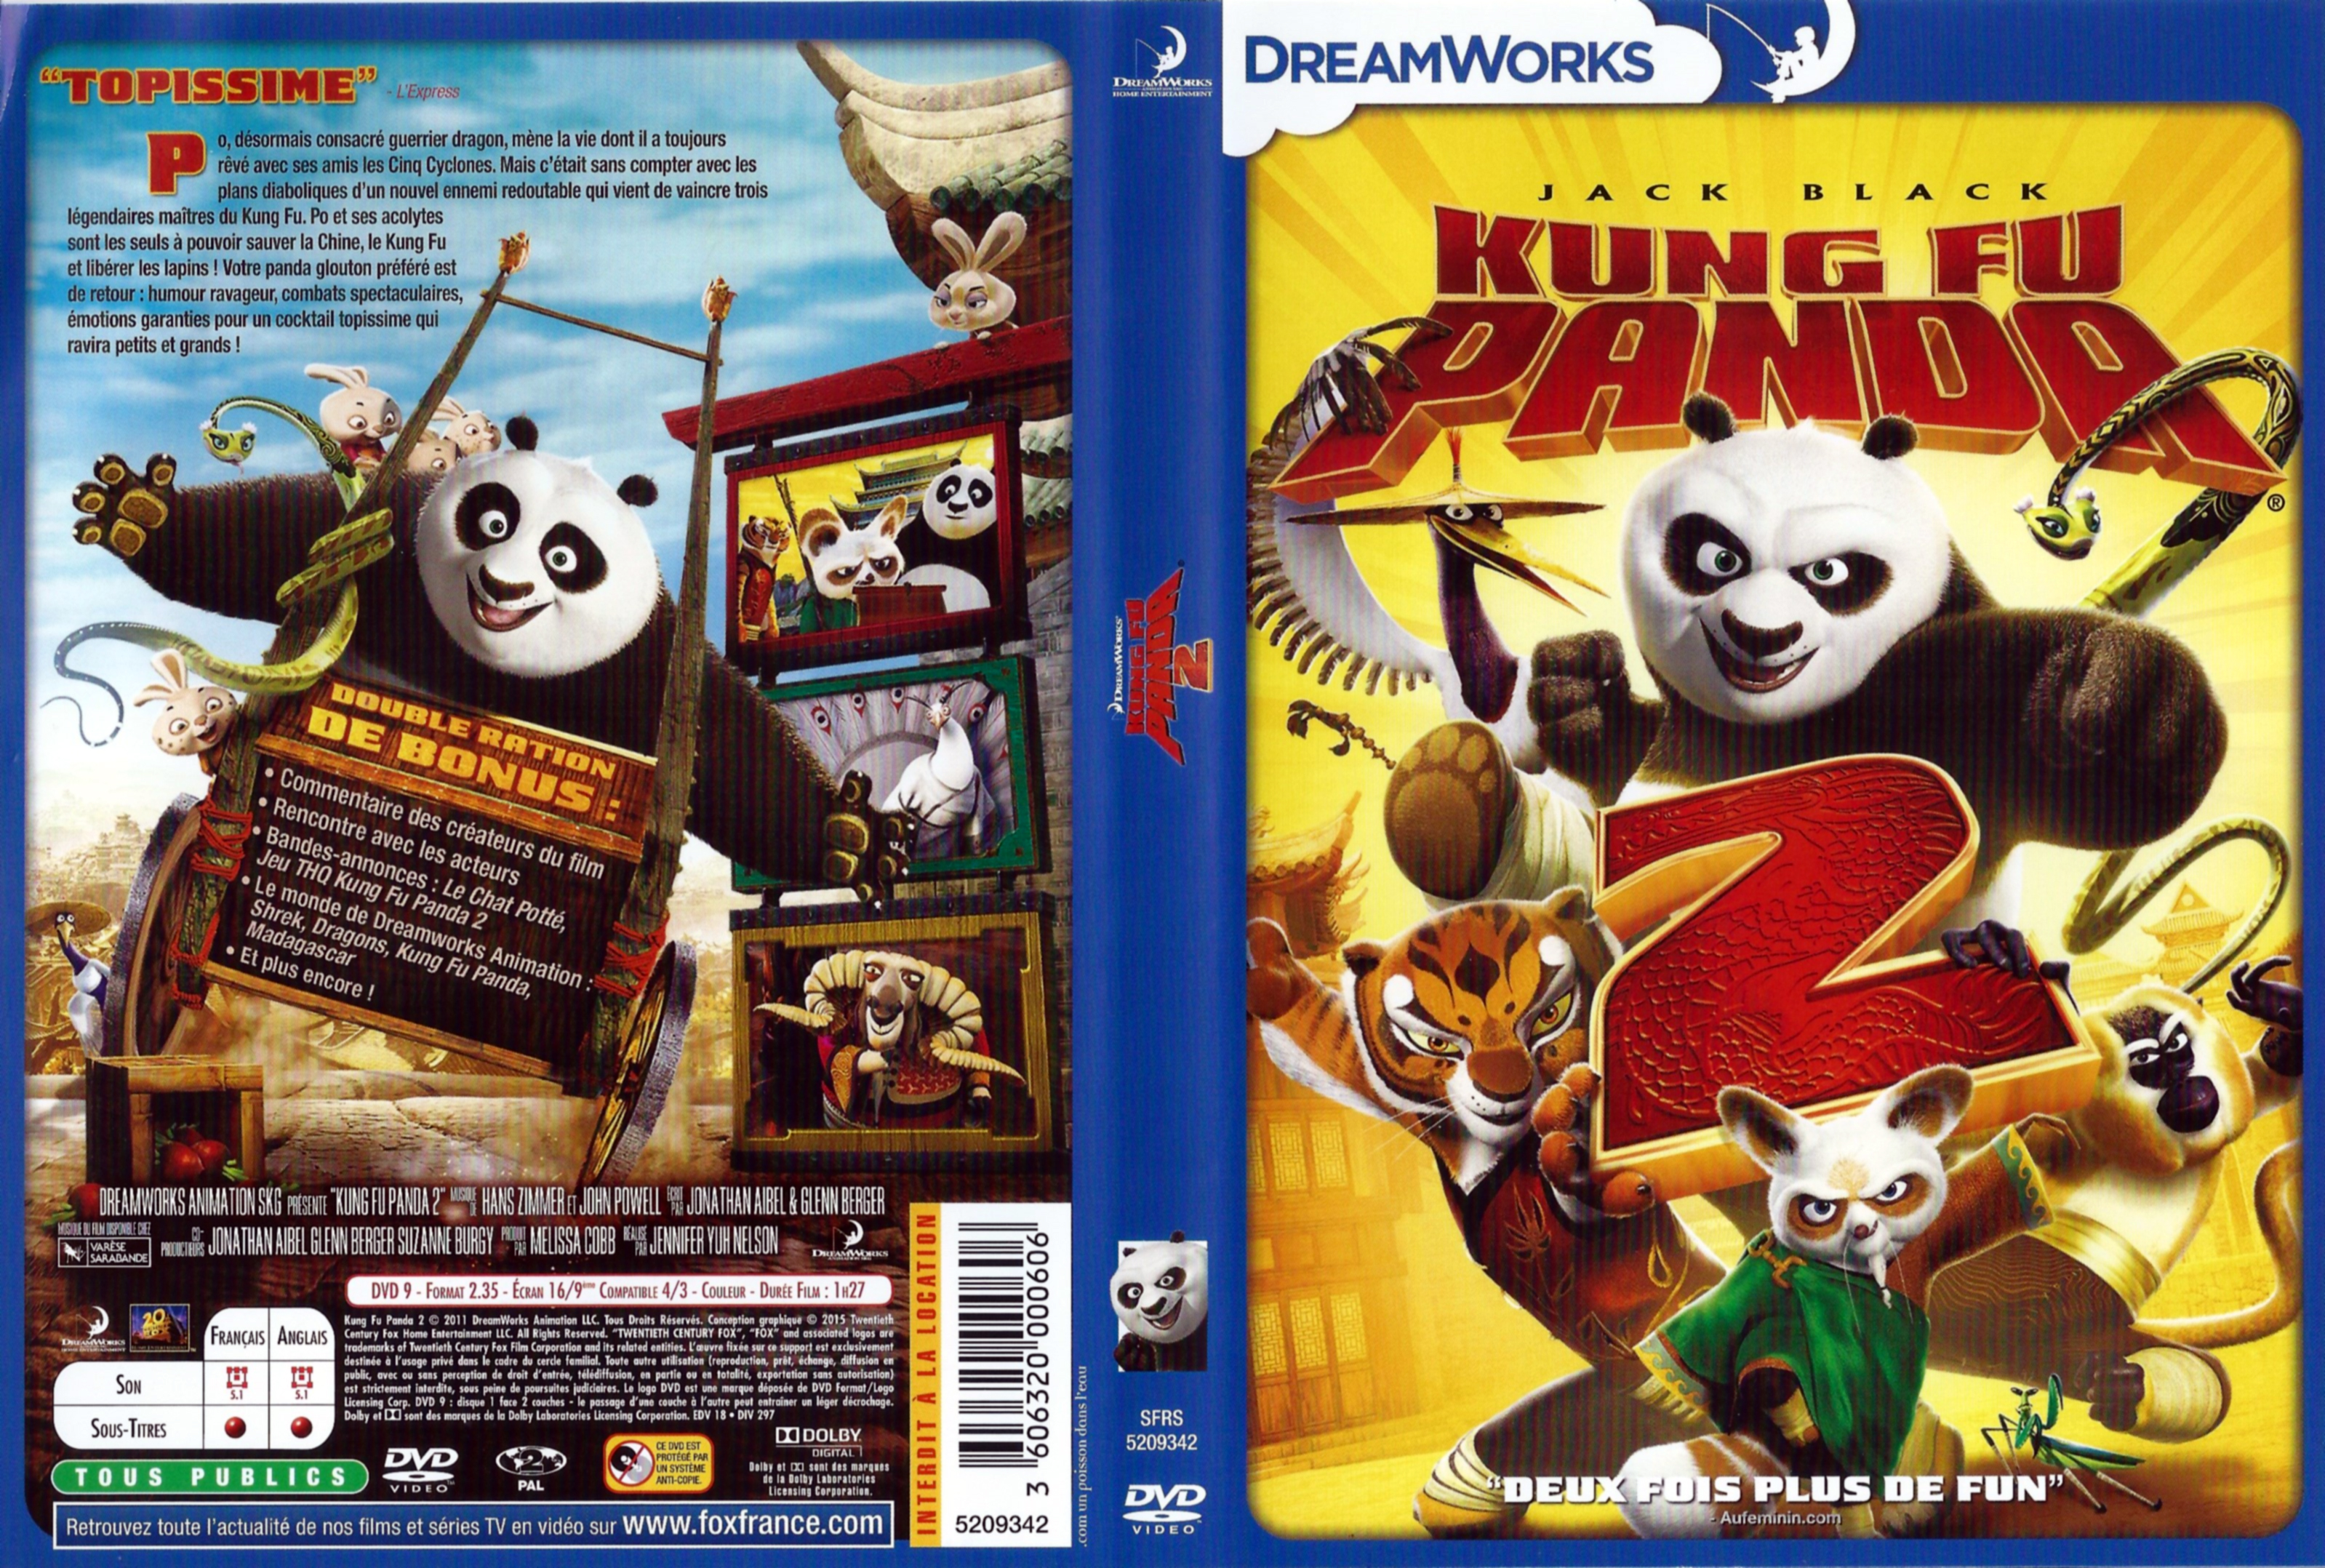 Jaquette DVD Kung fu panda 2 v2